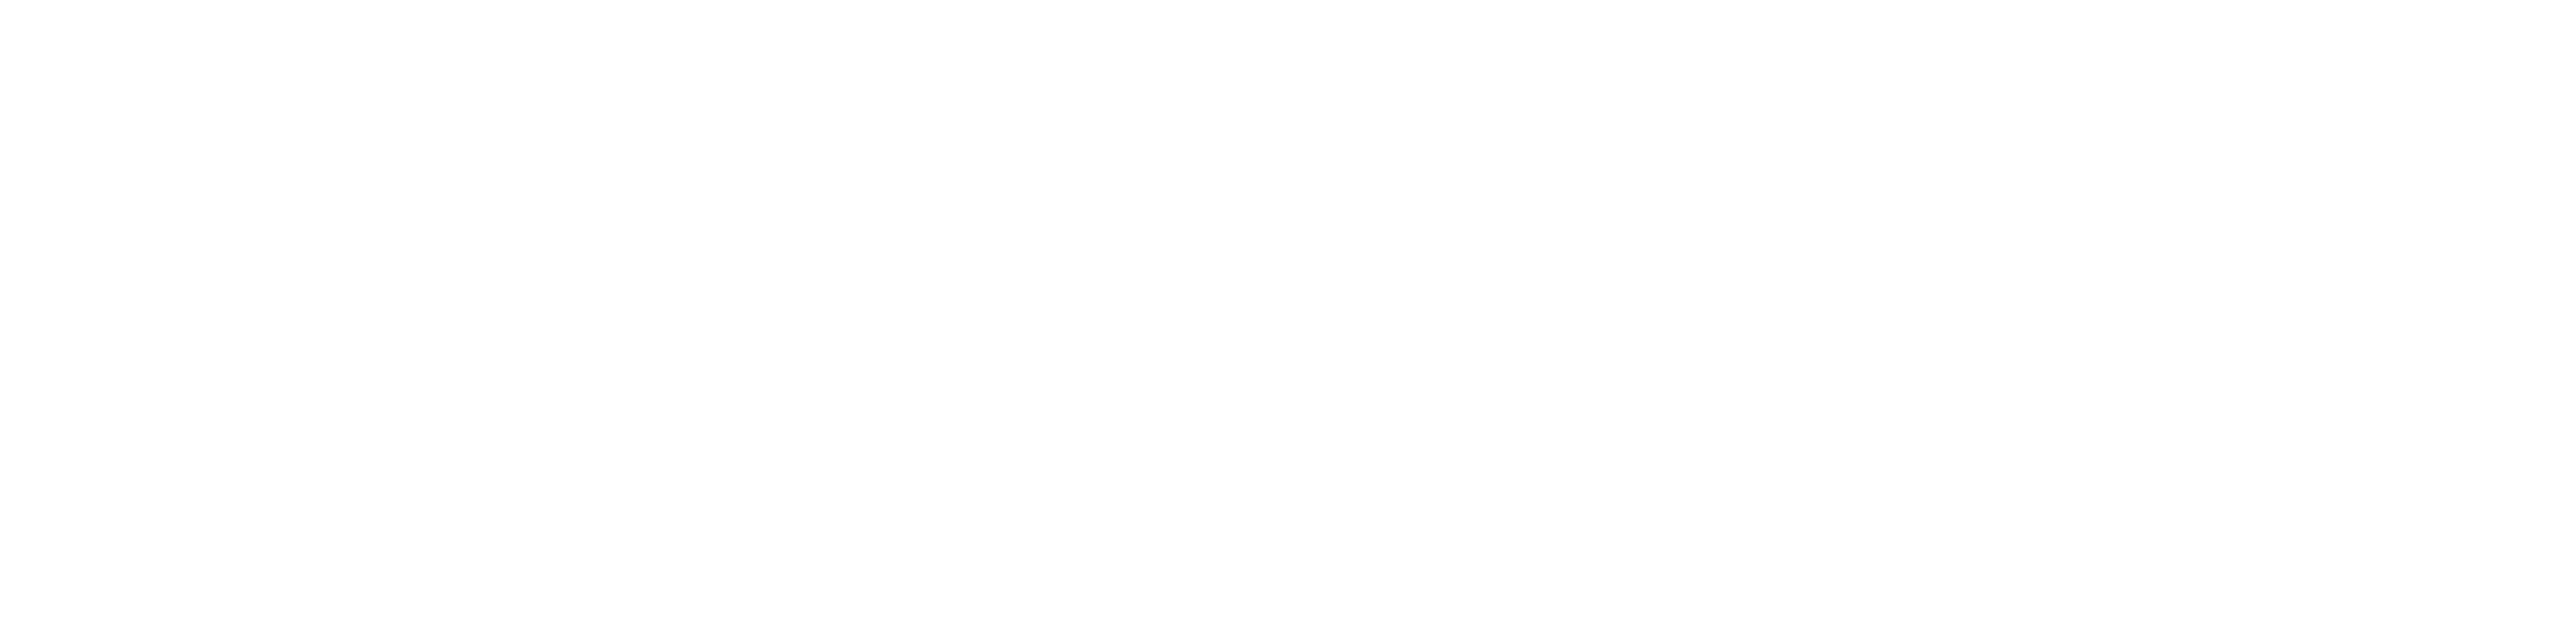 ImmoPolis Real Estate GmbH